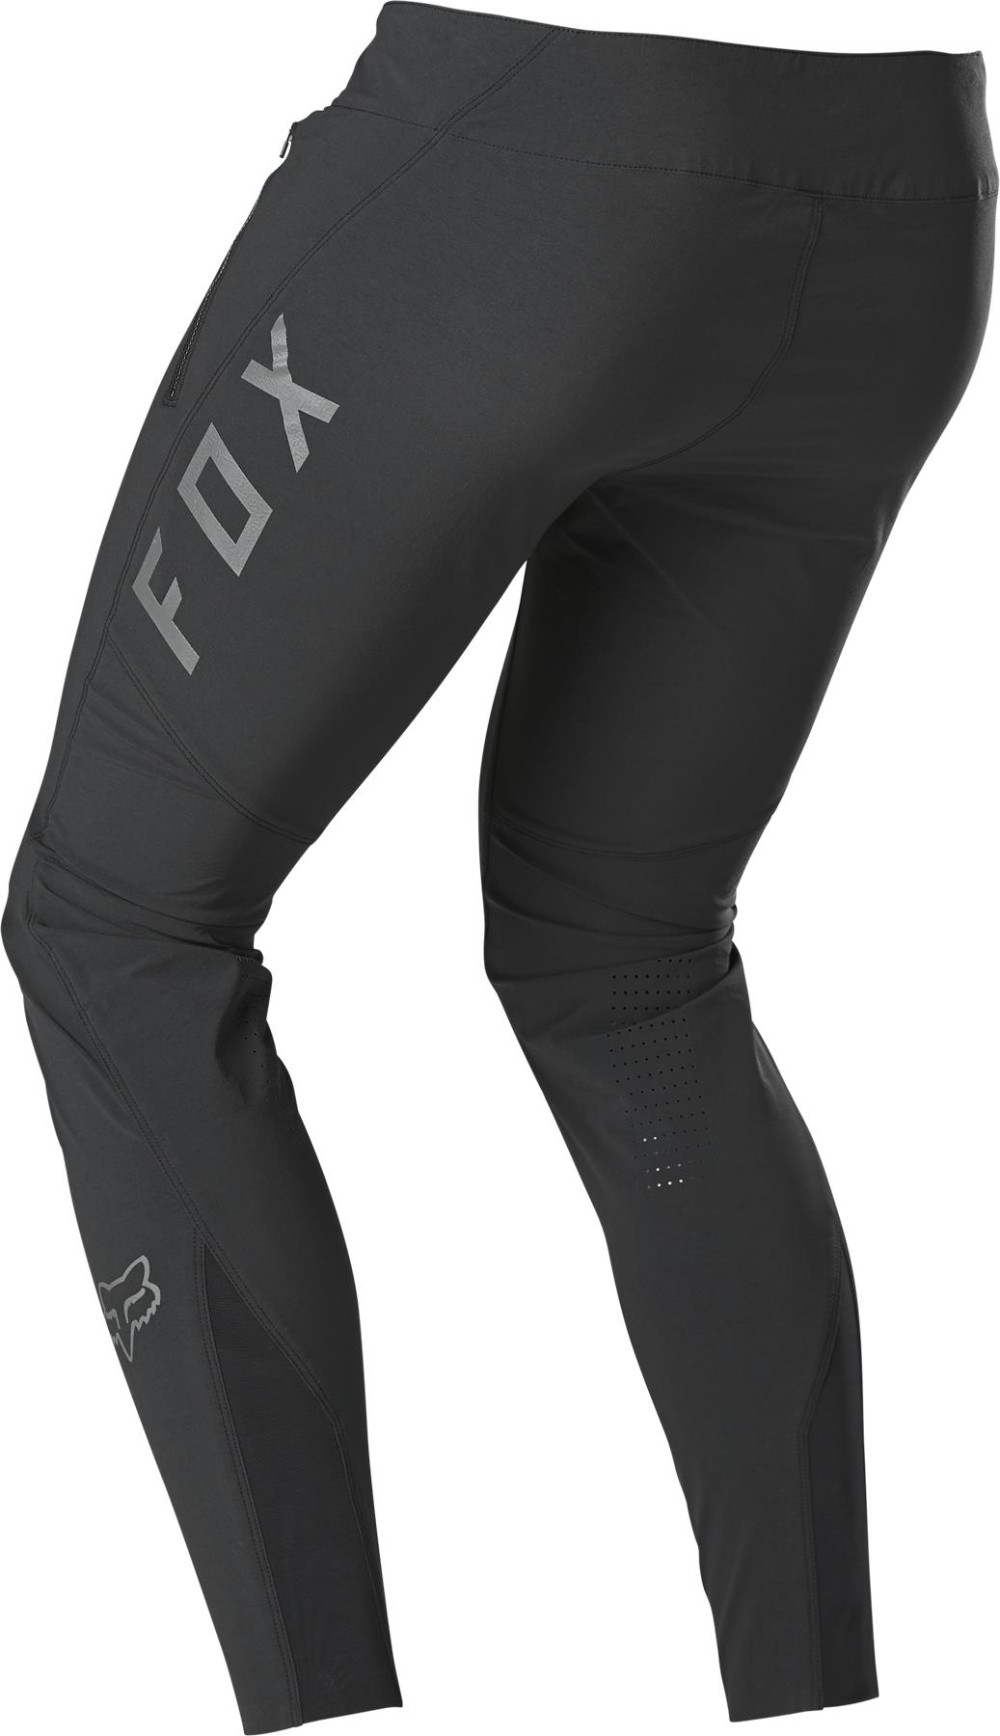 Flexair MTB Cycling Trousers image 1